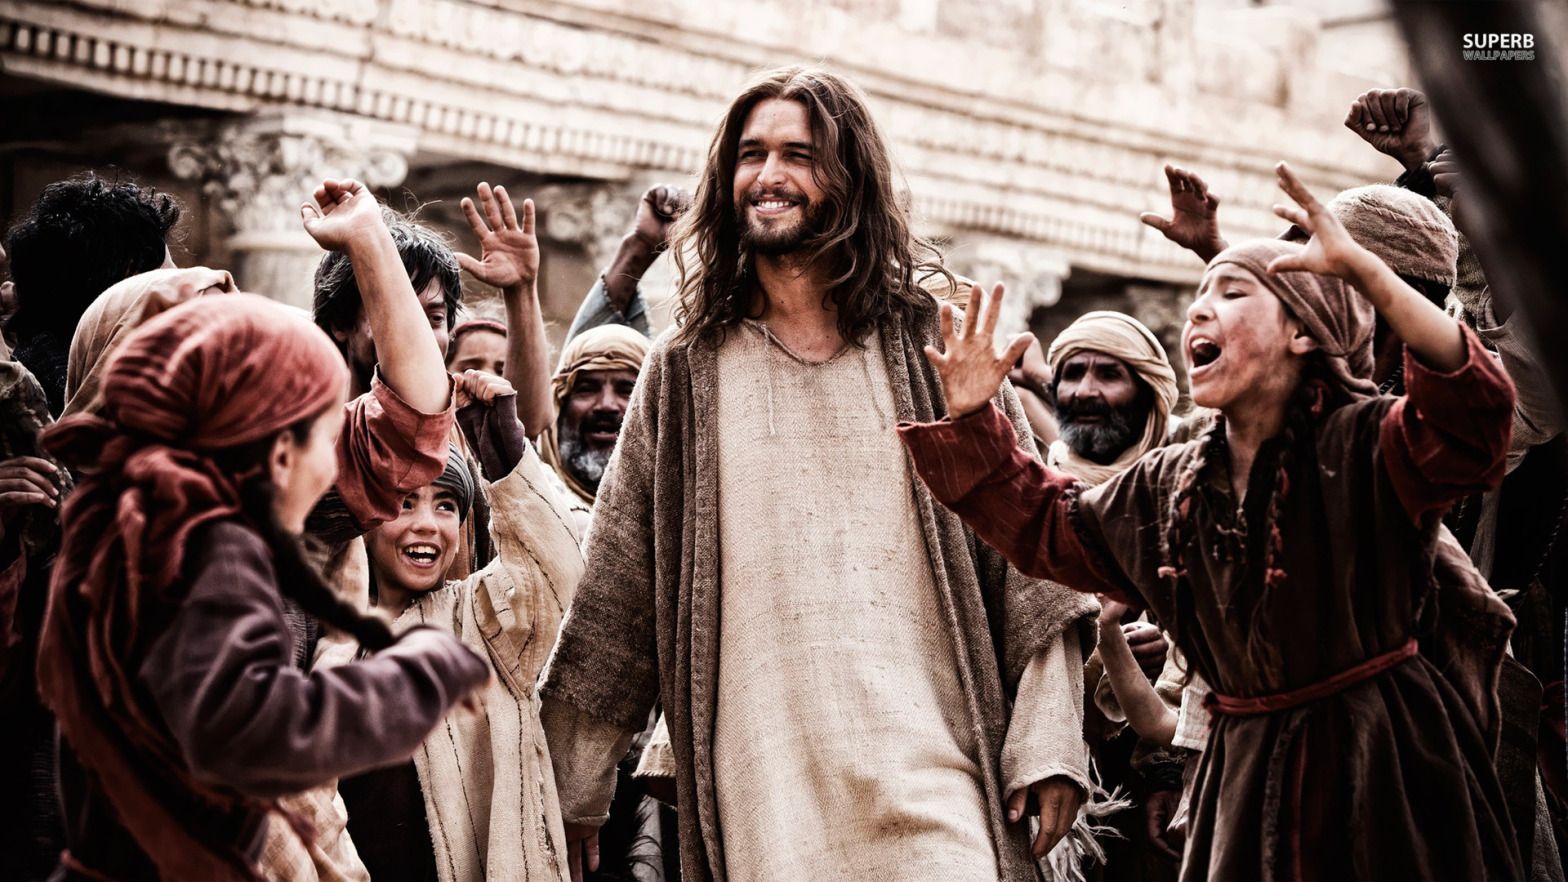 Don't Jesus Movies Break the 2nd Commandment?